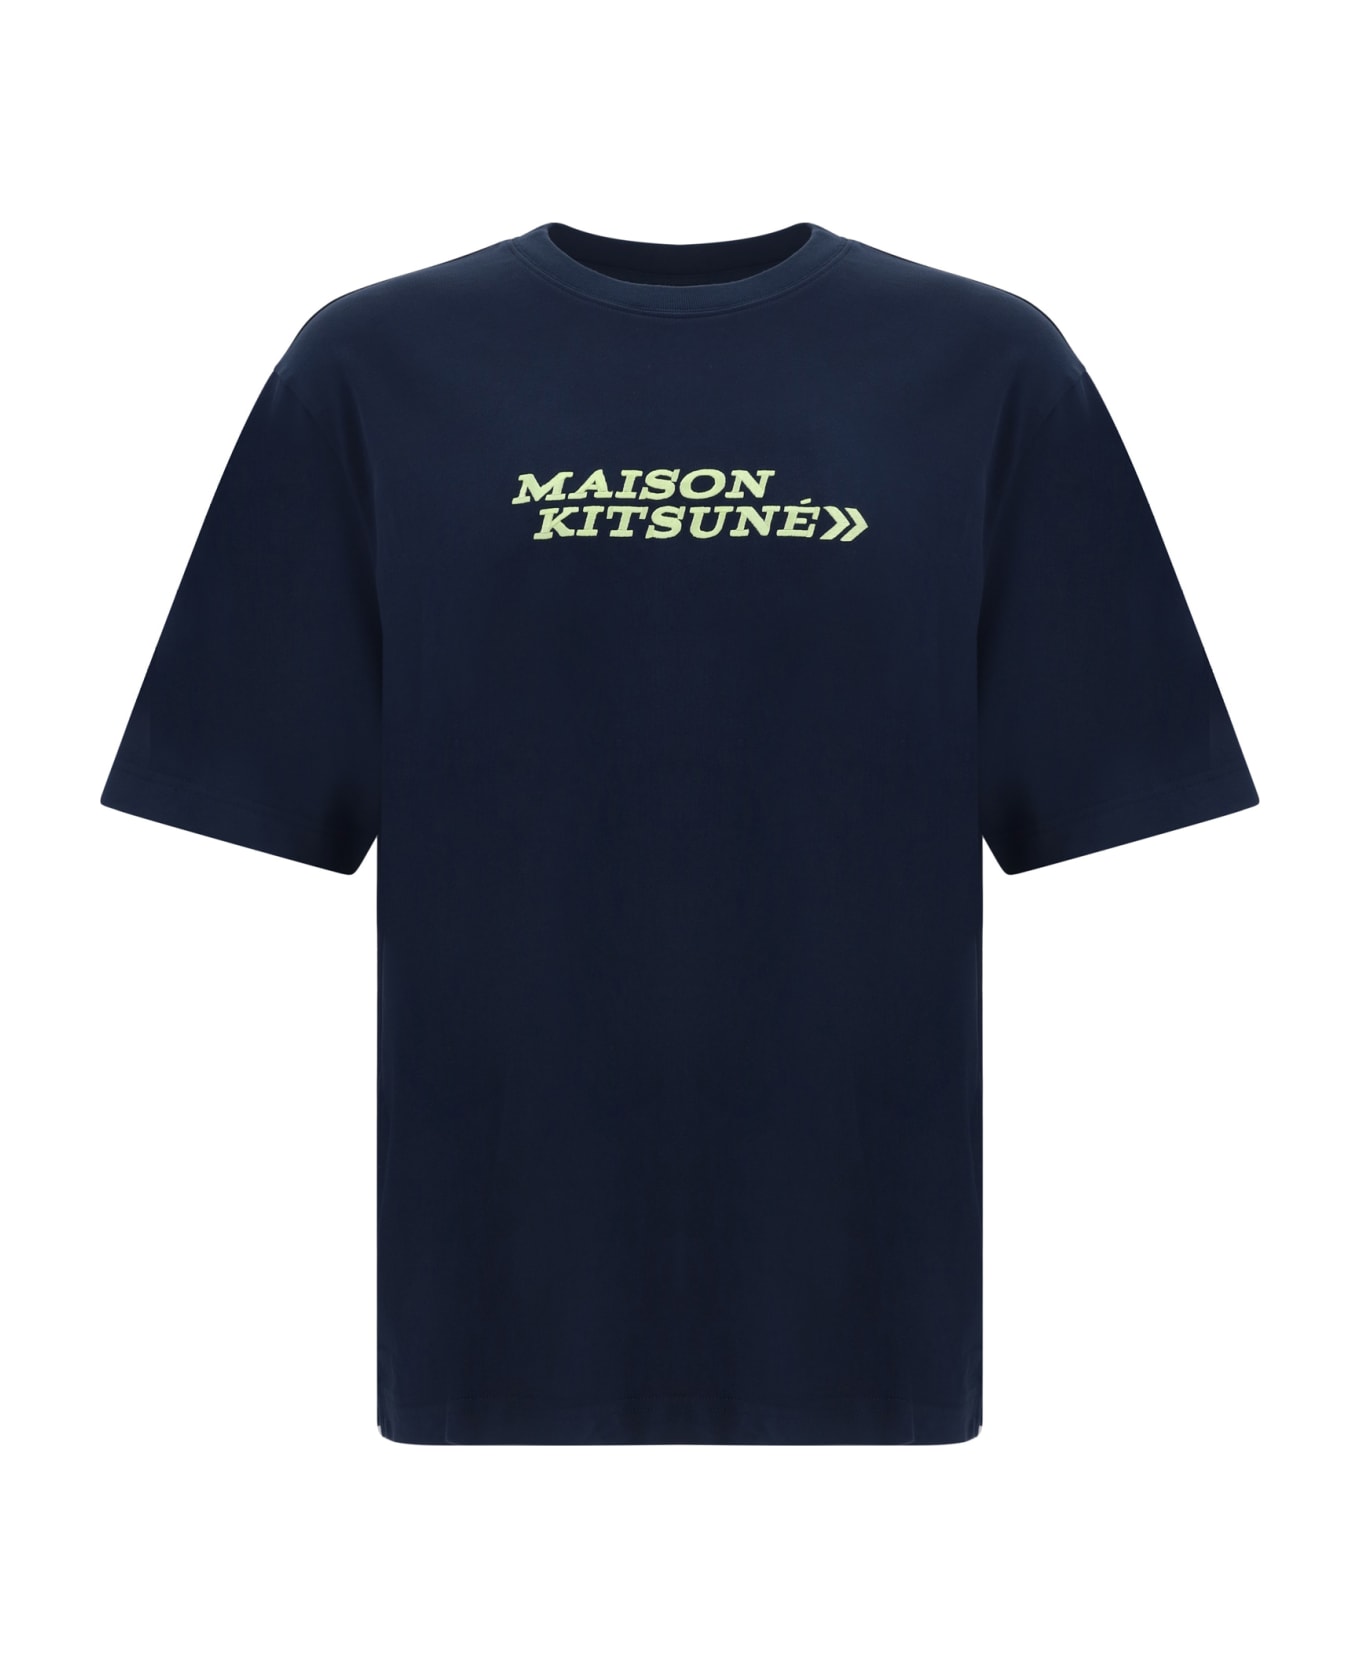 Maison Kitsuné T-shirt - Deep Navy